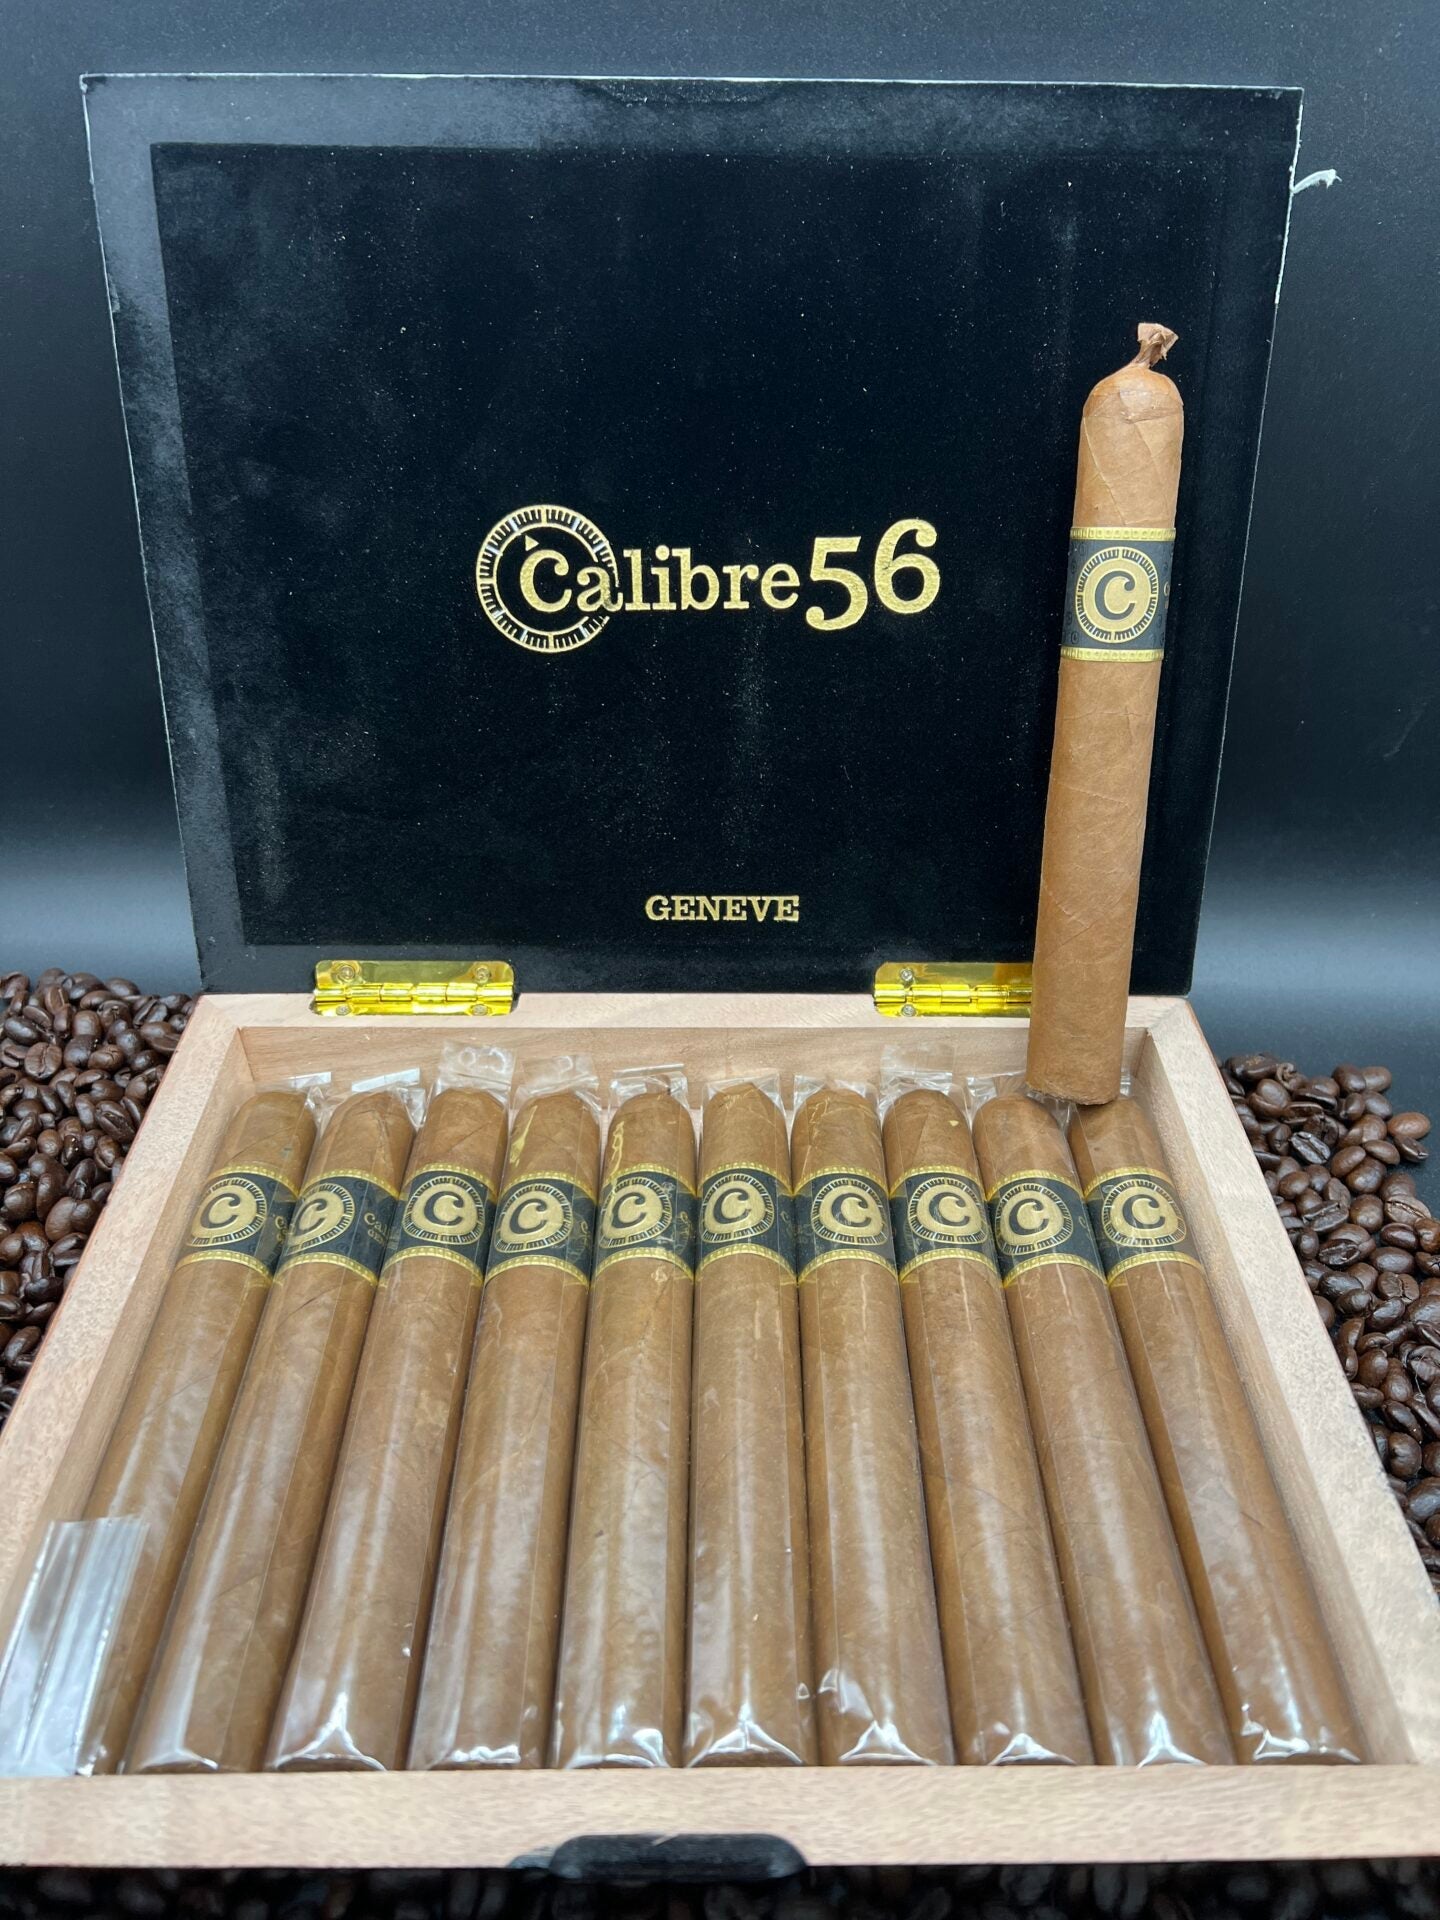 Calibre Geneve - Calibre 56 cigars supplied by Sir Louis Cigars